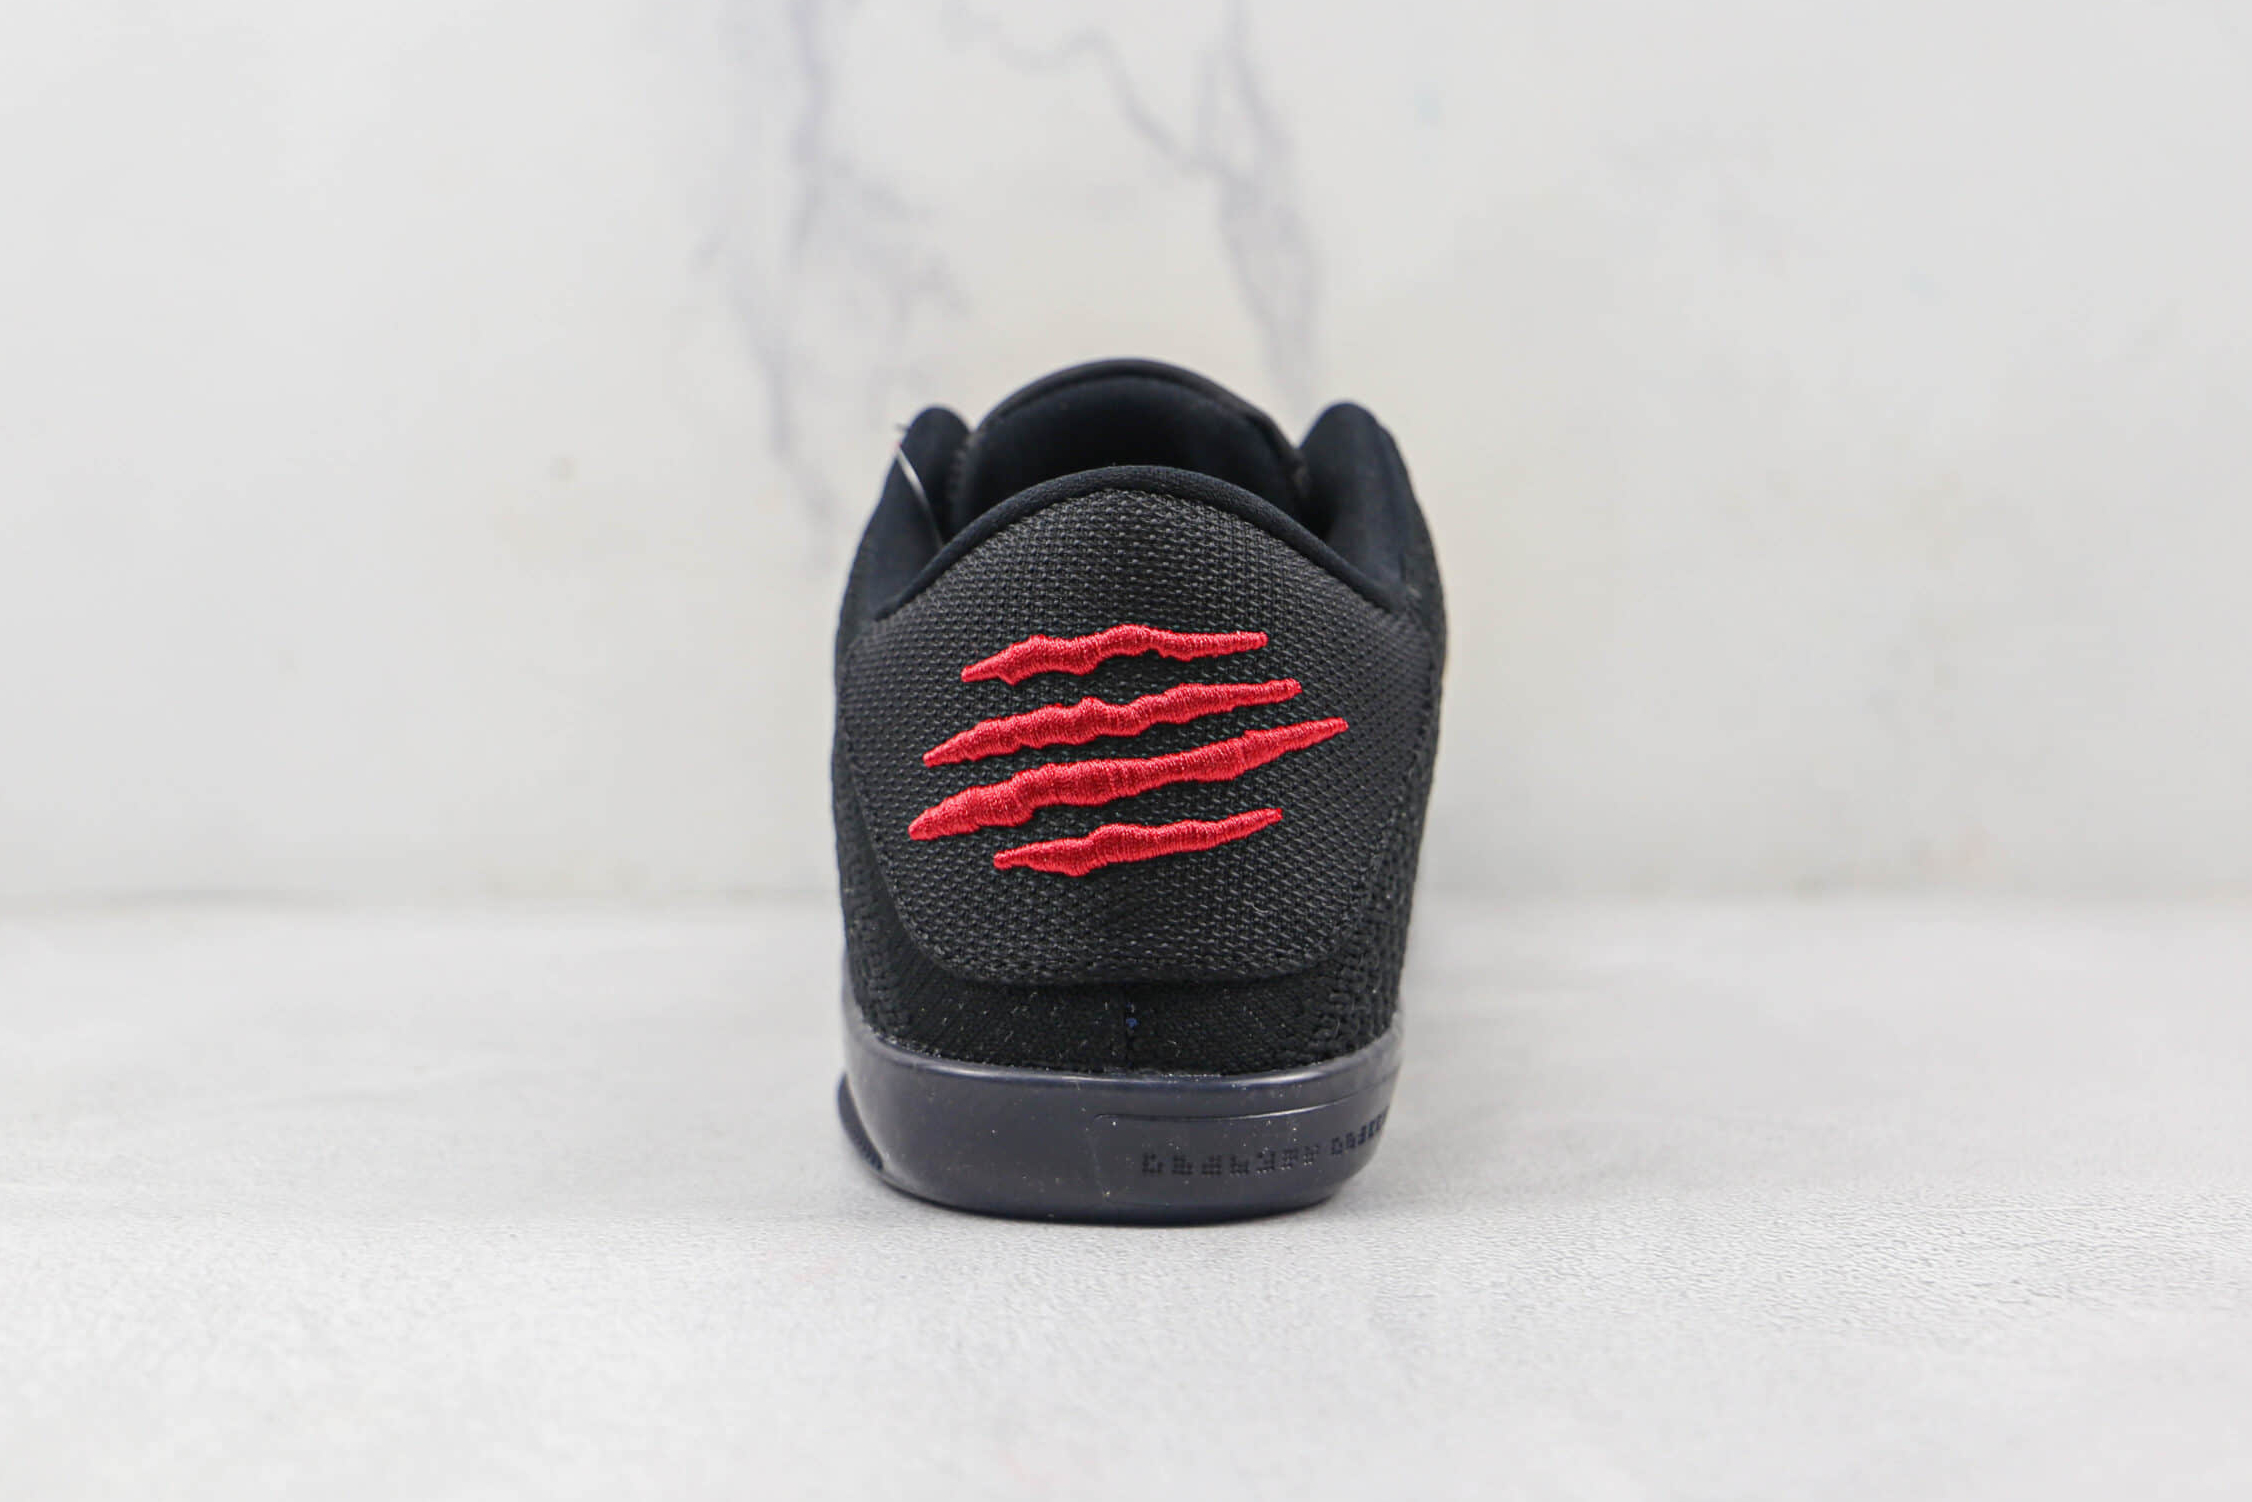 Nike Kobe 11 Elite Low 'Bruce Lee' 822675-706 - Premium Athletic Shoes for Superior Performance